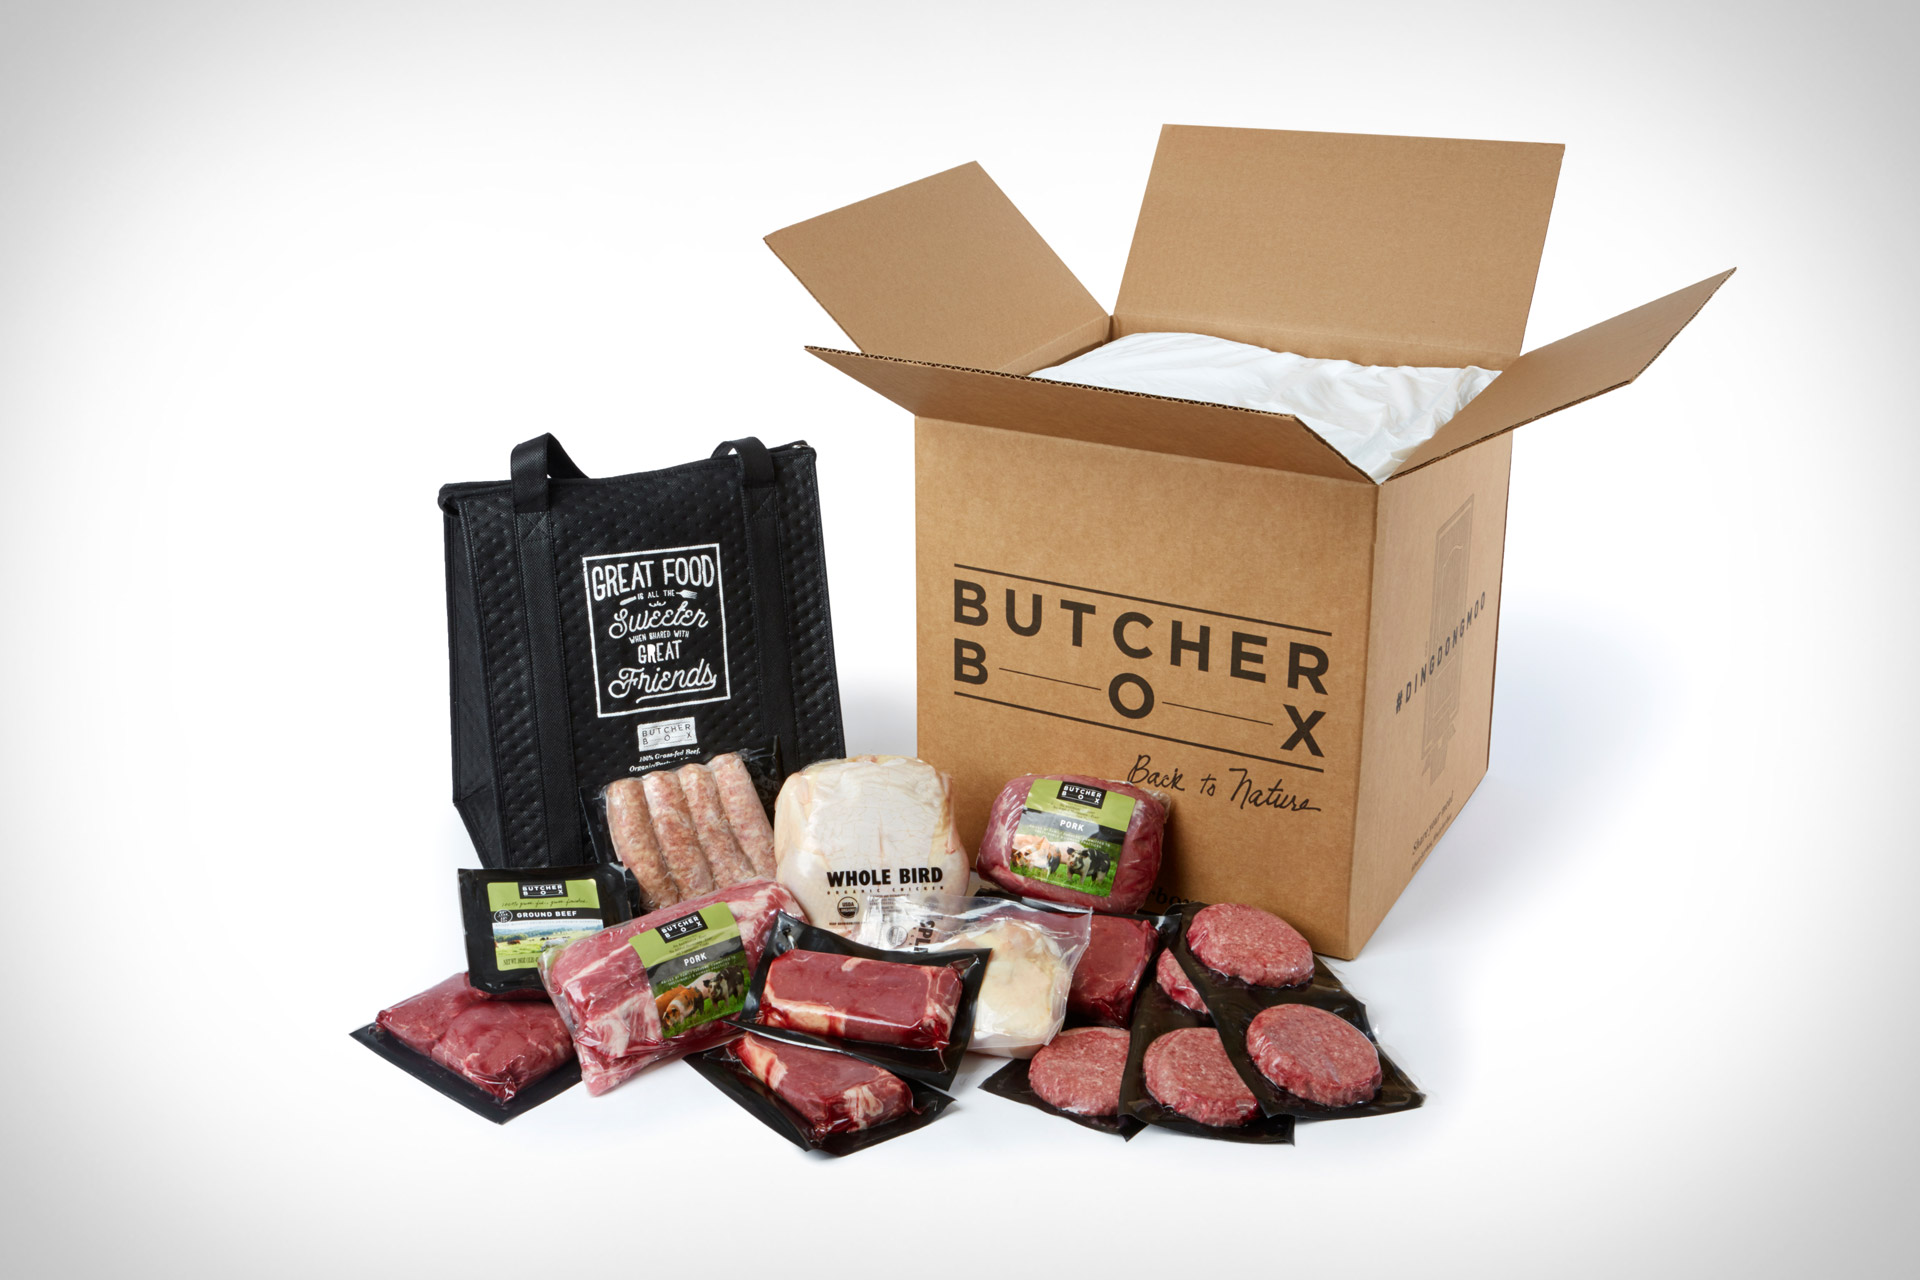 https://uncrate.com/p/2019/01/butcher-box1.jpg